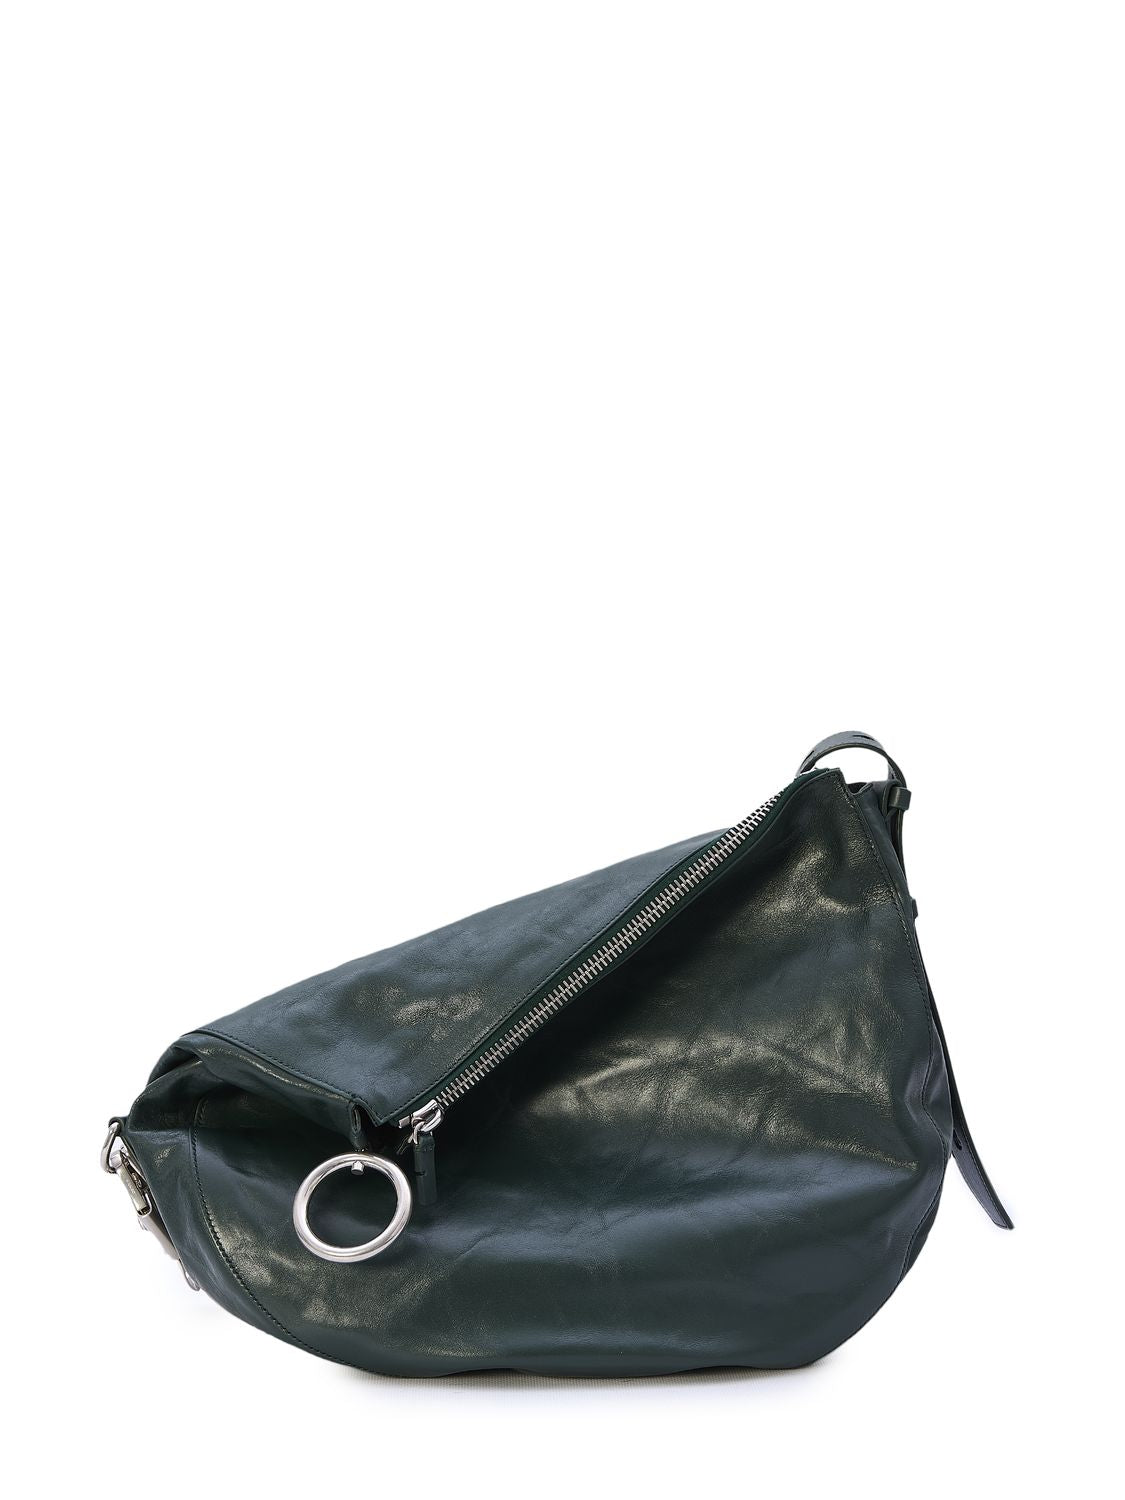 Burberry Green Medium Crinkled Calfskin Shoulder Bag With Horse-shaped Clip And Adjustable Strap